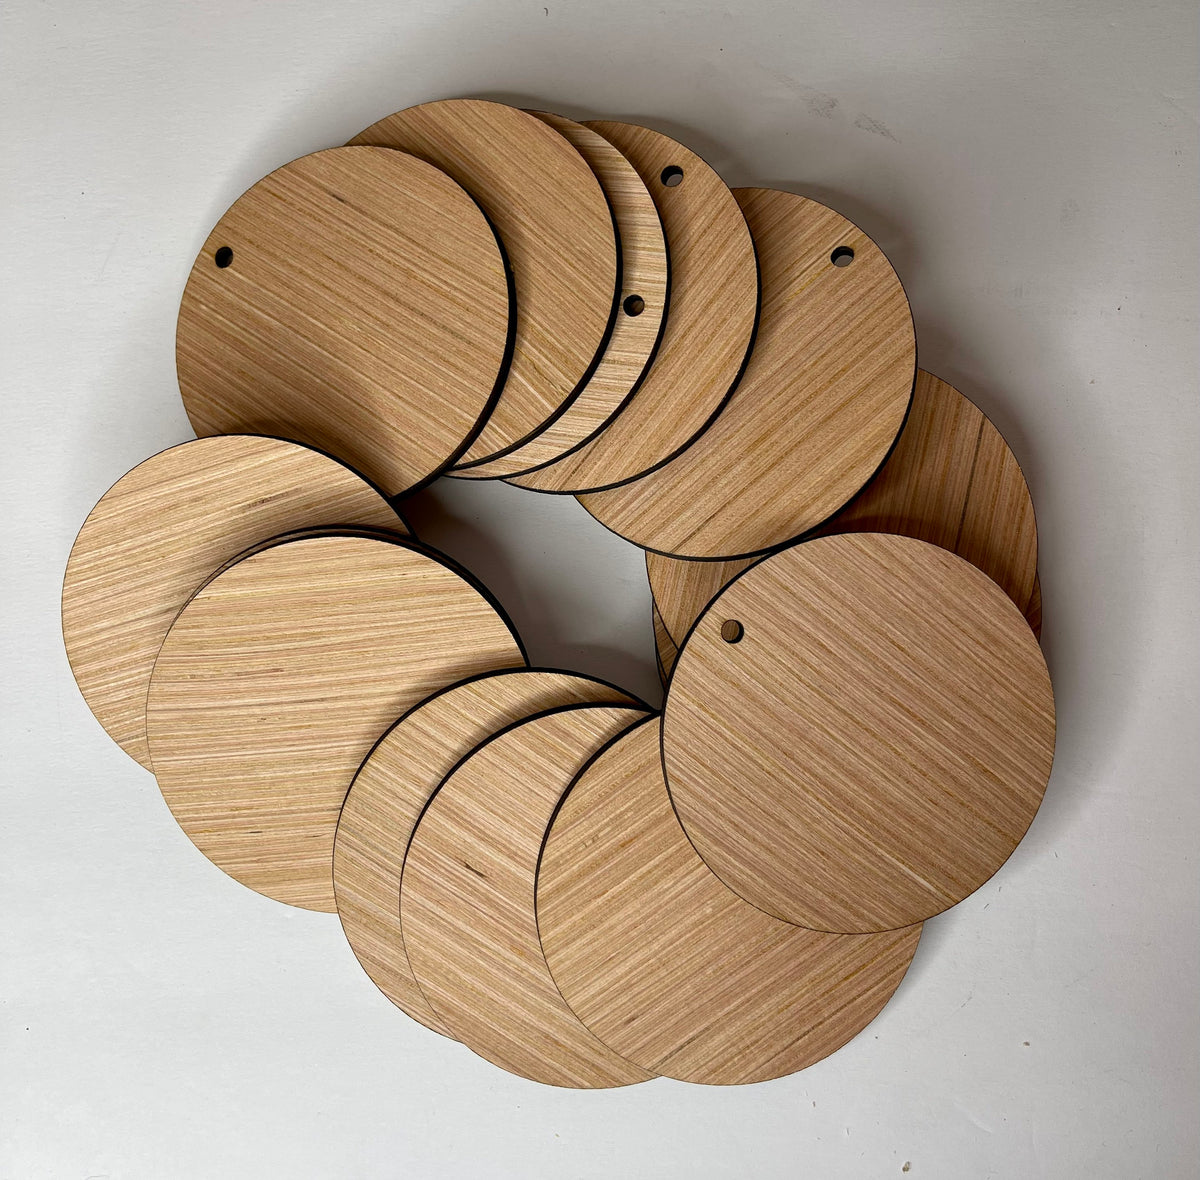 Round Wooden Discs, Wooden Circles